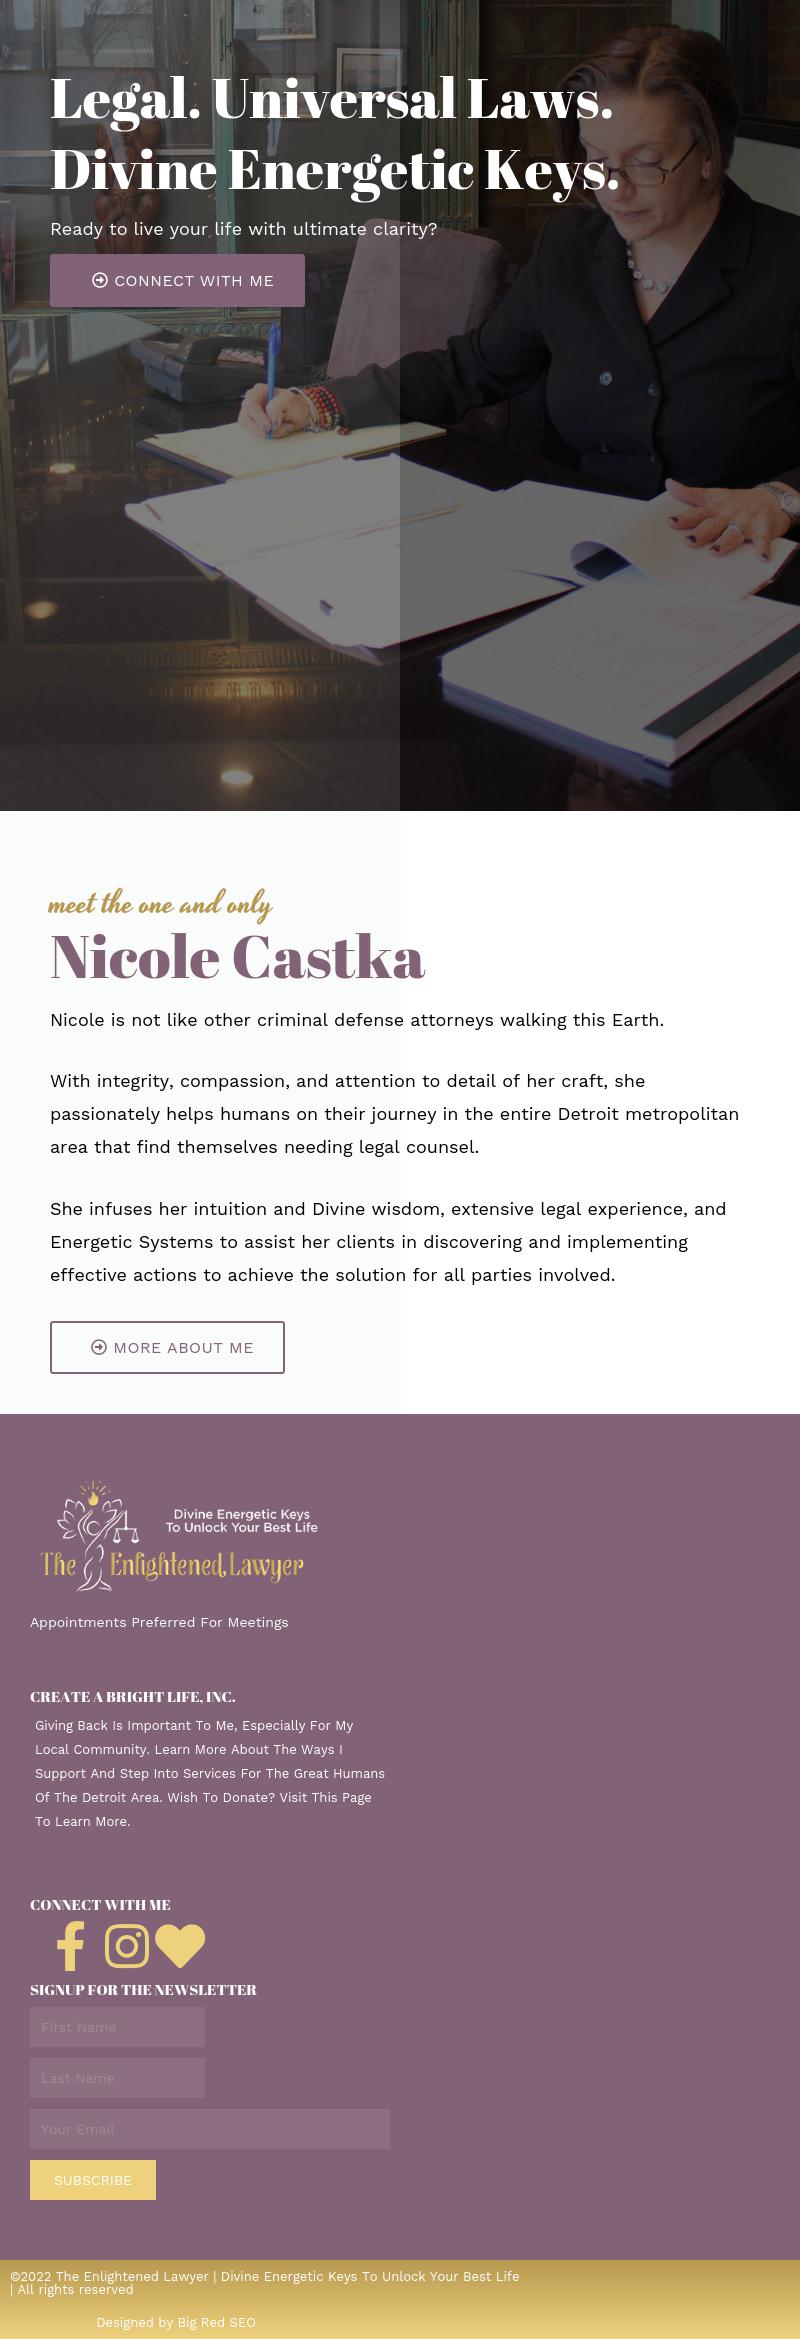 Law Office of Nicole L Castka PLLC - Detroit MI Lawyers